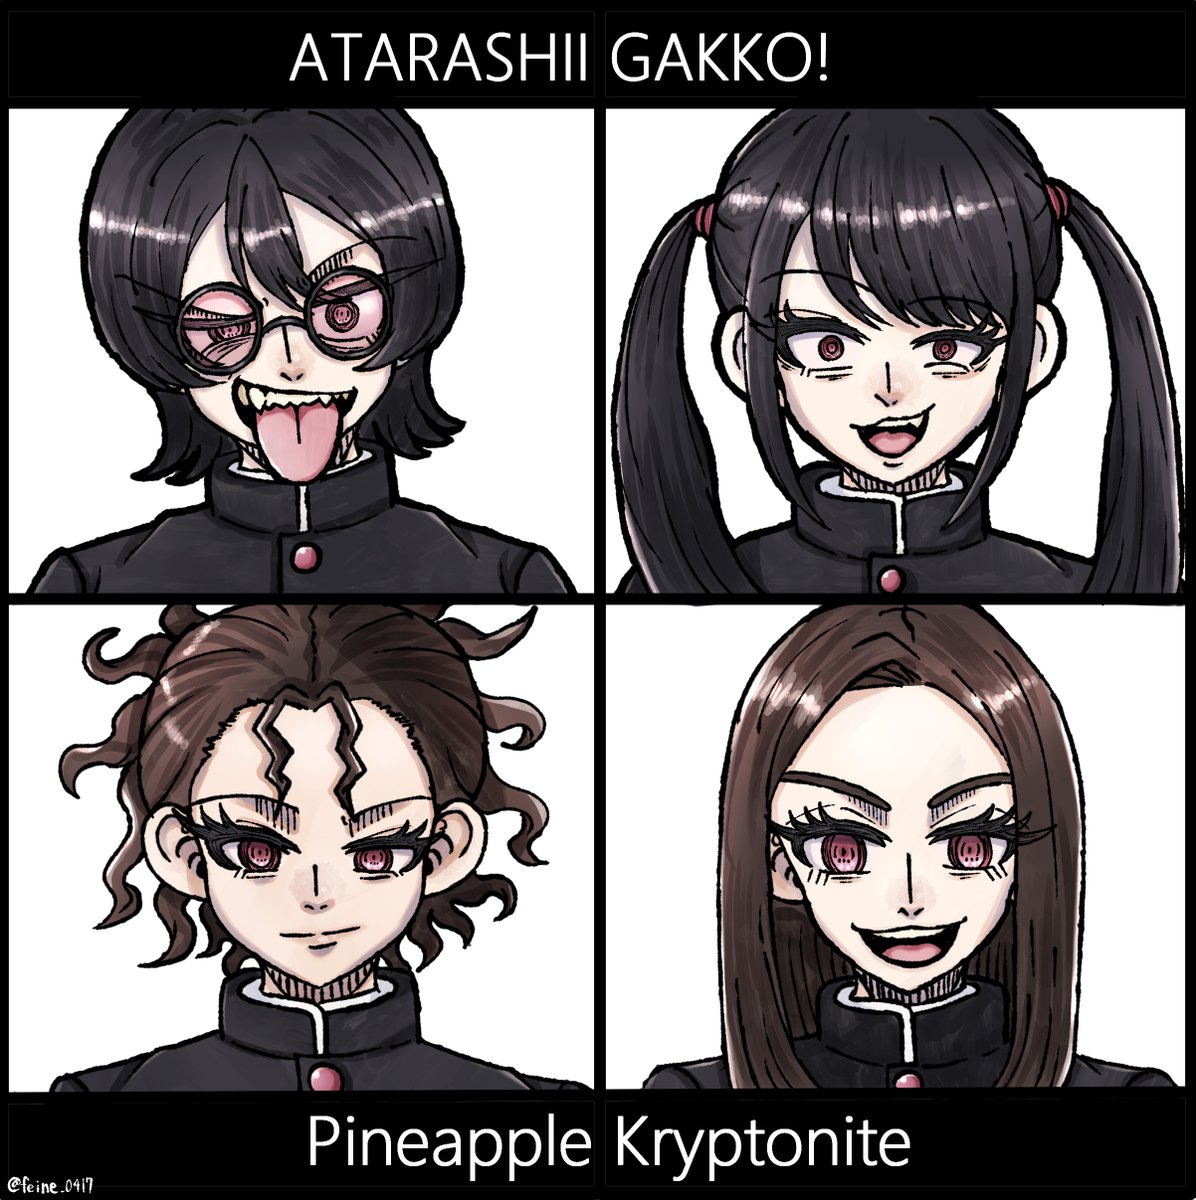 Pineapple Kryptonite Remix🍍 #新しい学校のリーダーズ #ATARASHIIGAKKO #atarashiigakko_art